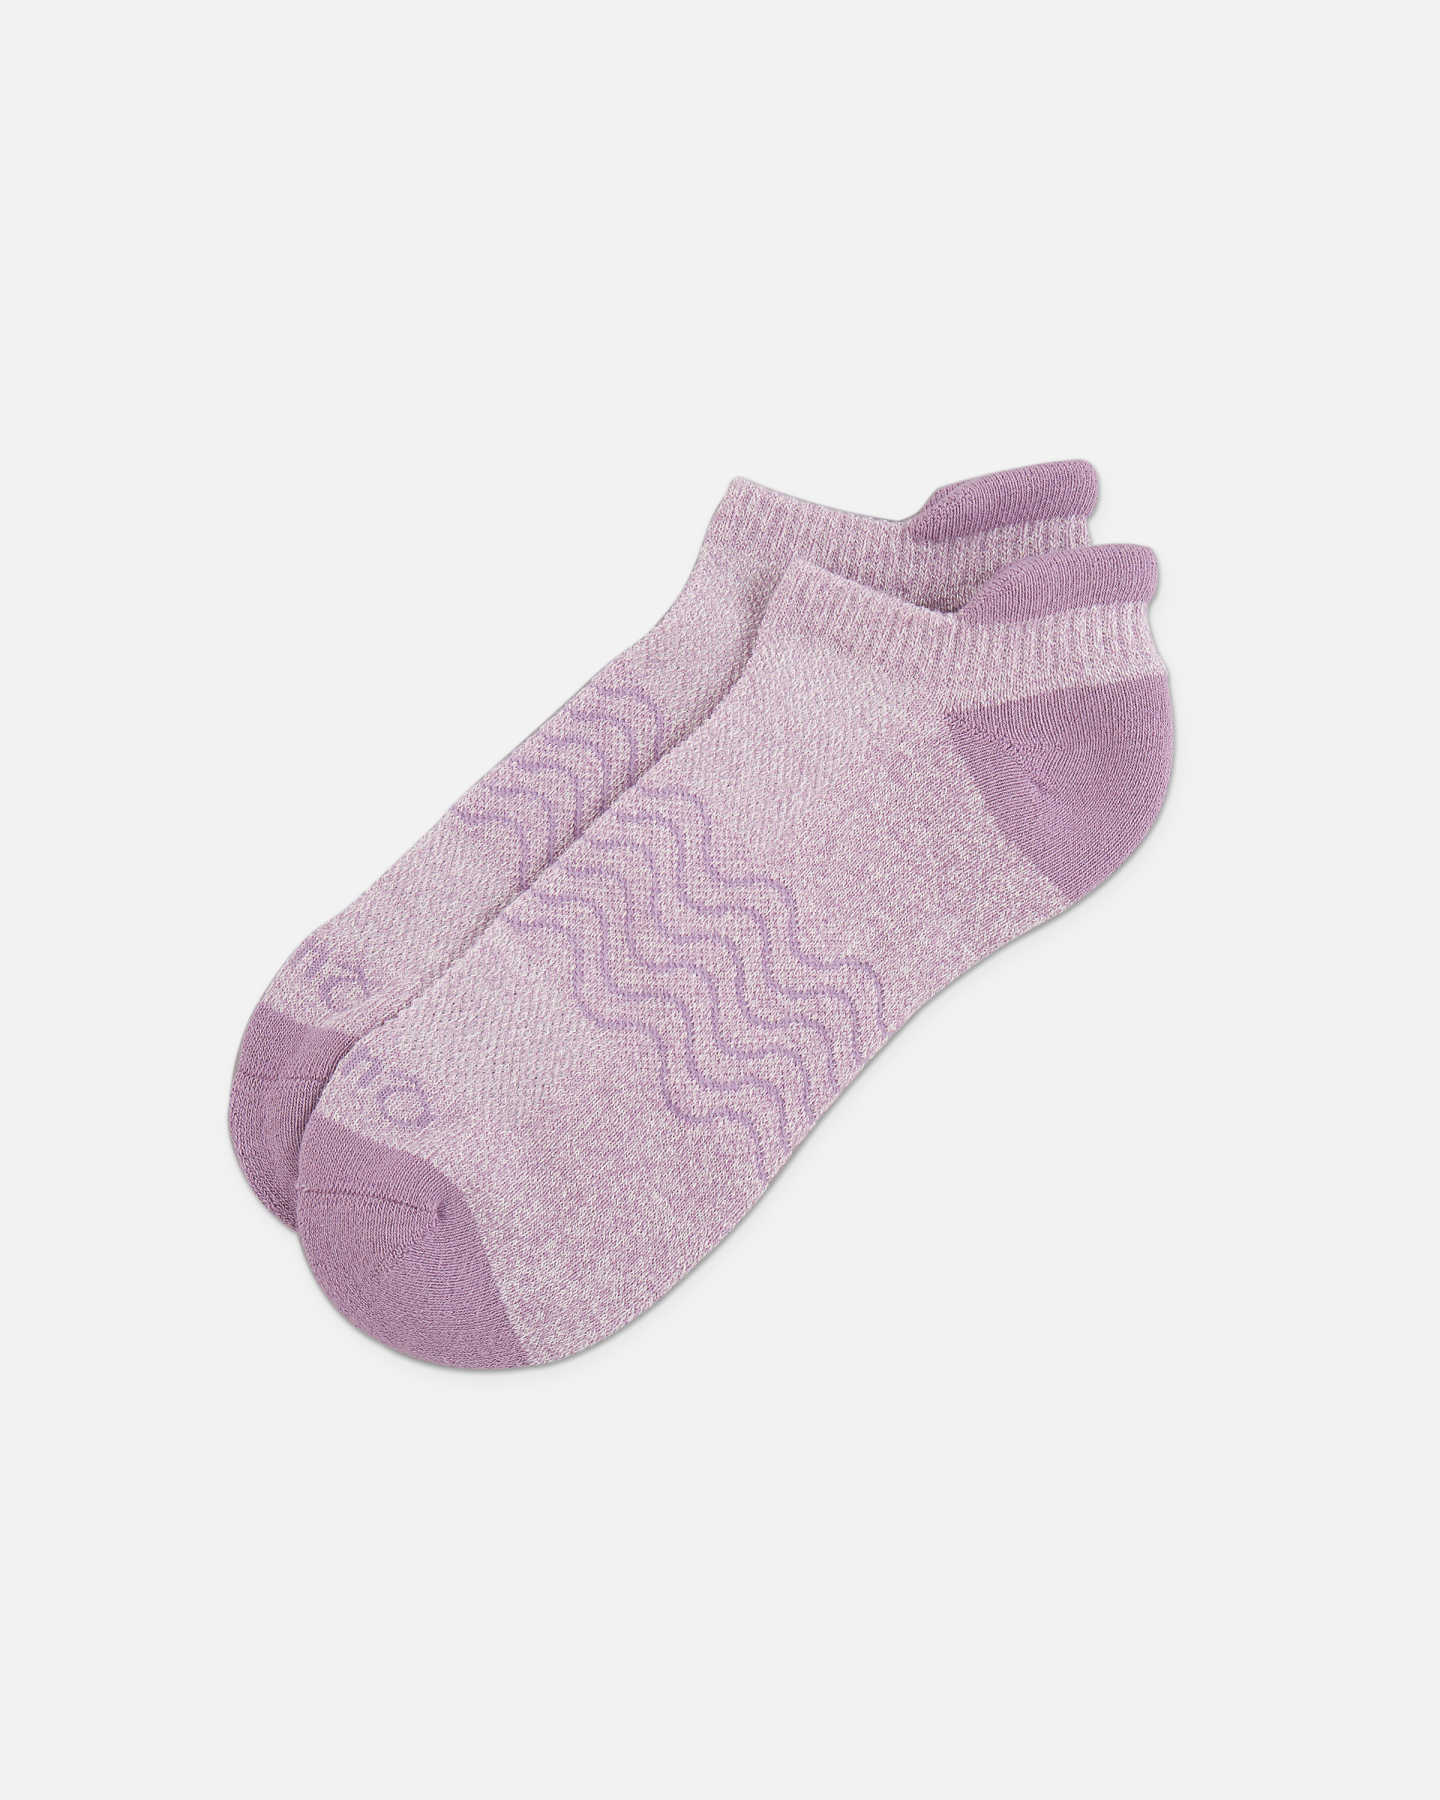 Organic Colorblock Marl Ankle Socks (12-pack) - Pink/Blue/Purple Mix - 6 - Thumbnail